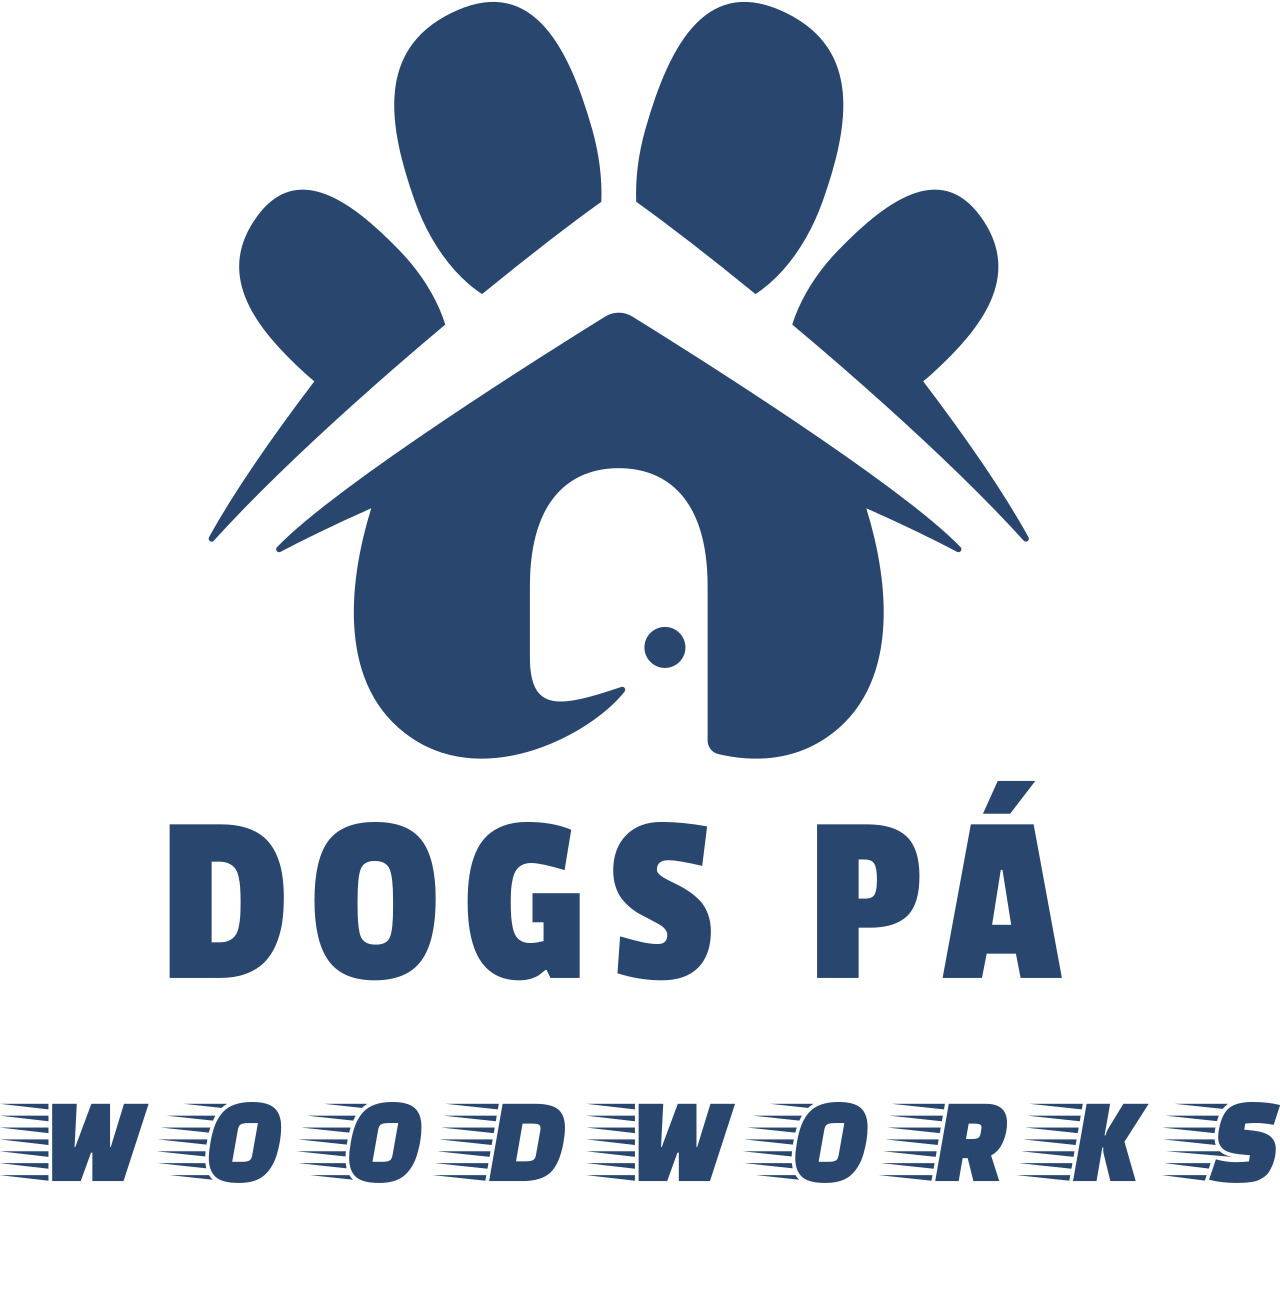 Dogs Pá Woodworks's logo